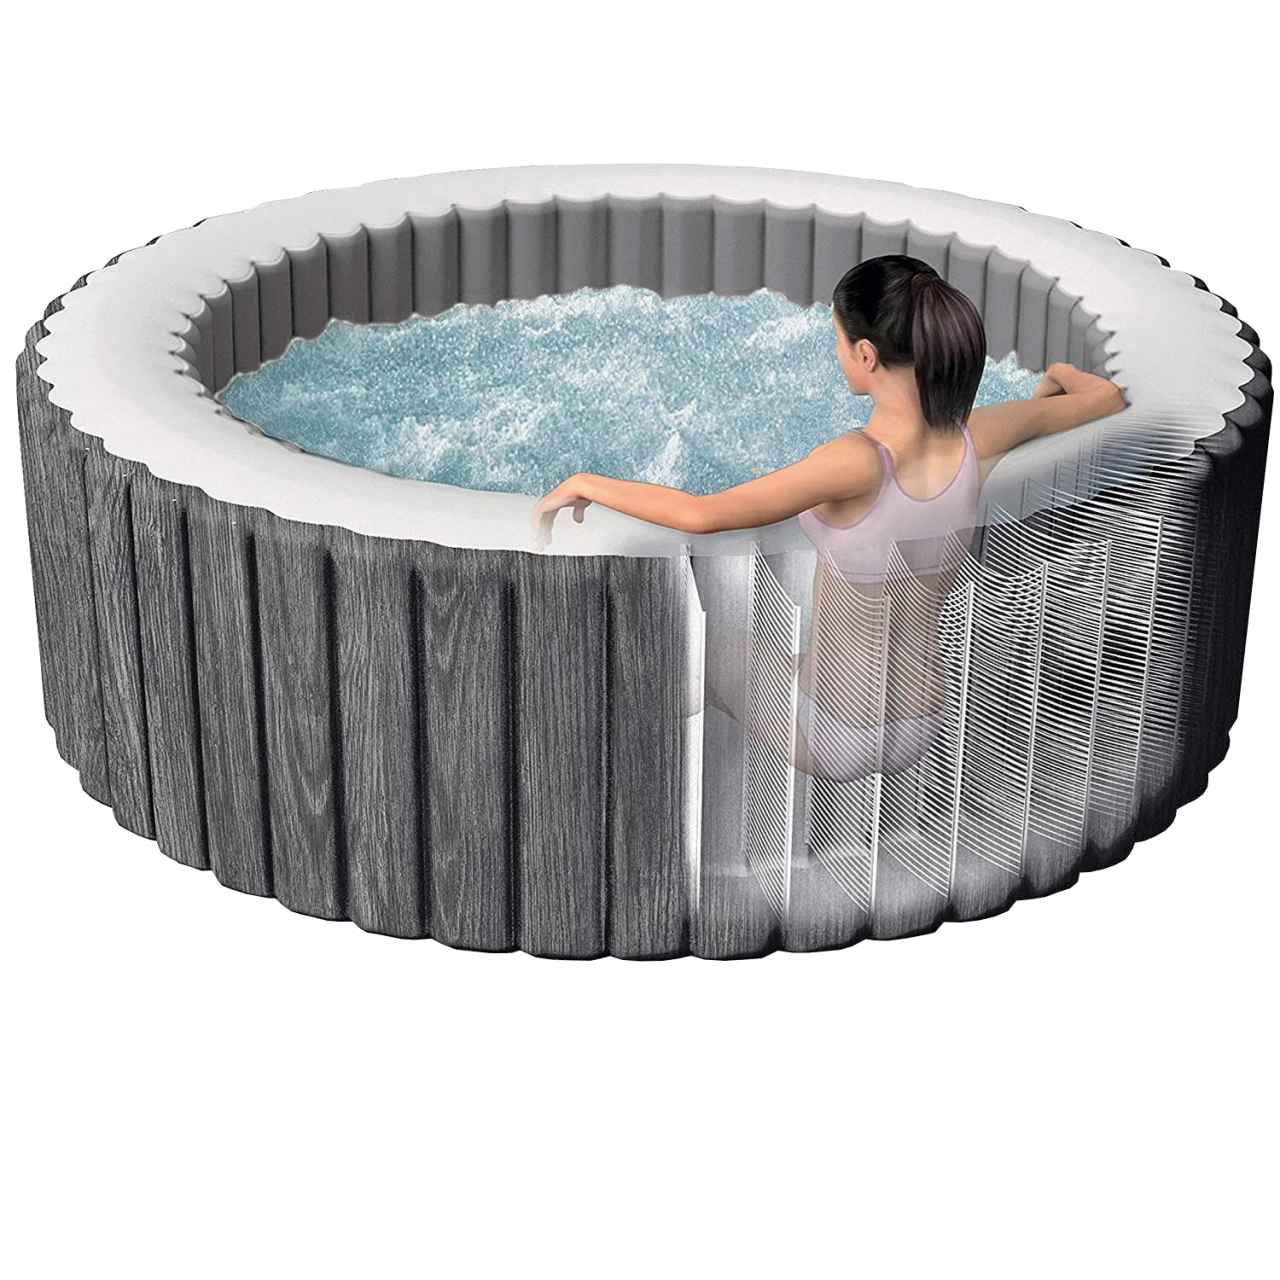 Intex 28442 Whirlpool Pure SPA Bubble Massage GreyWood 216x71 cm aufblasbar